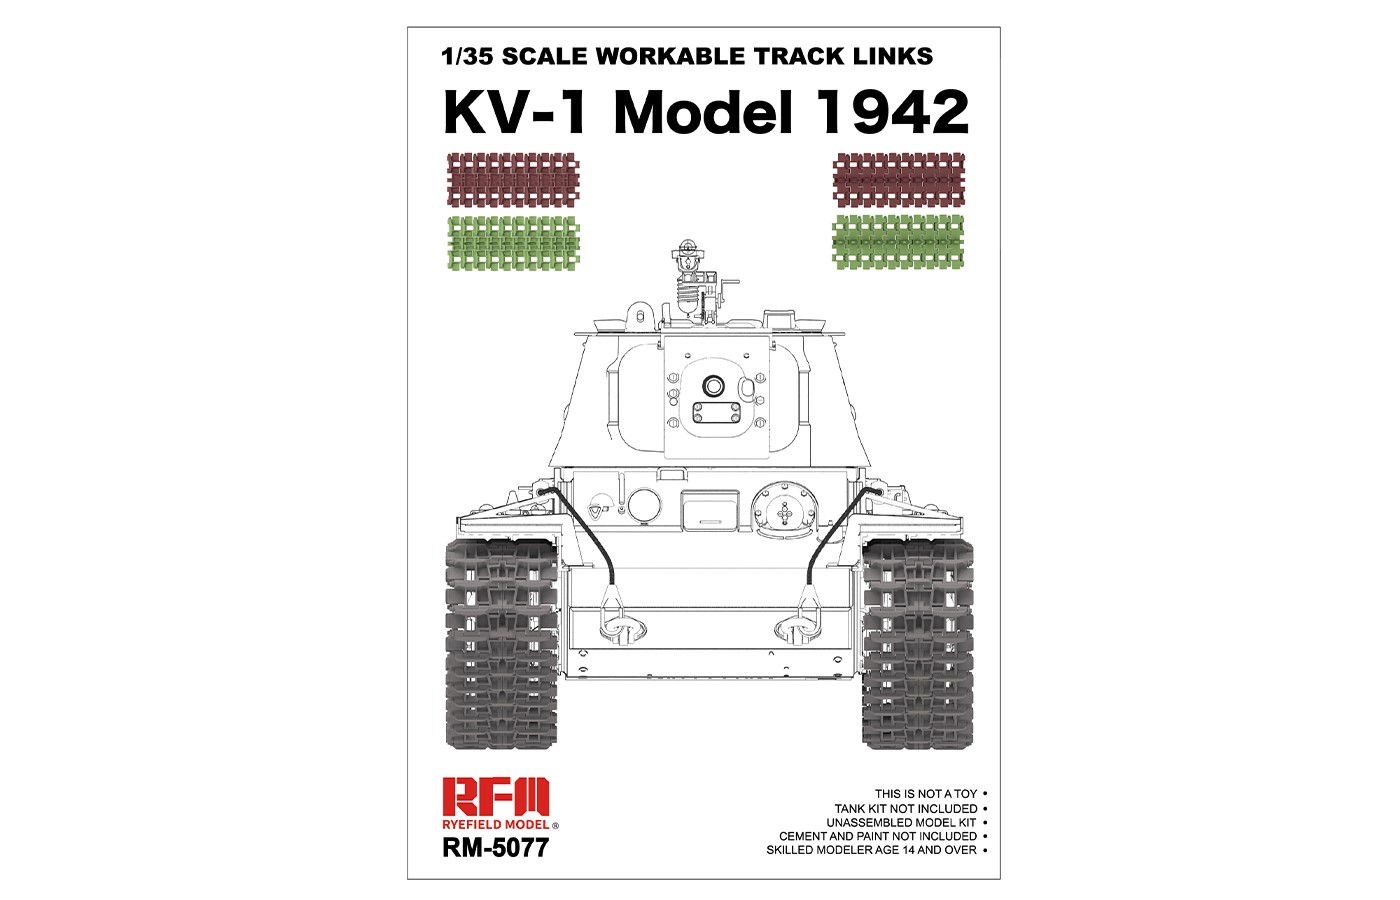 RM-5077 KV-1 WORKABLE TRACK LINKS